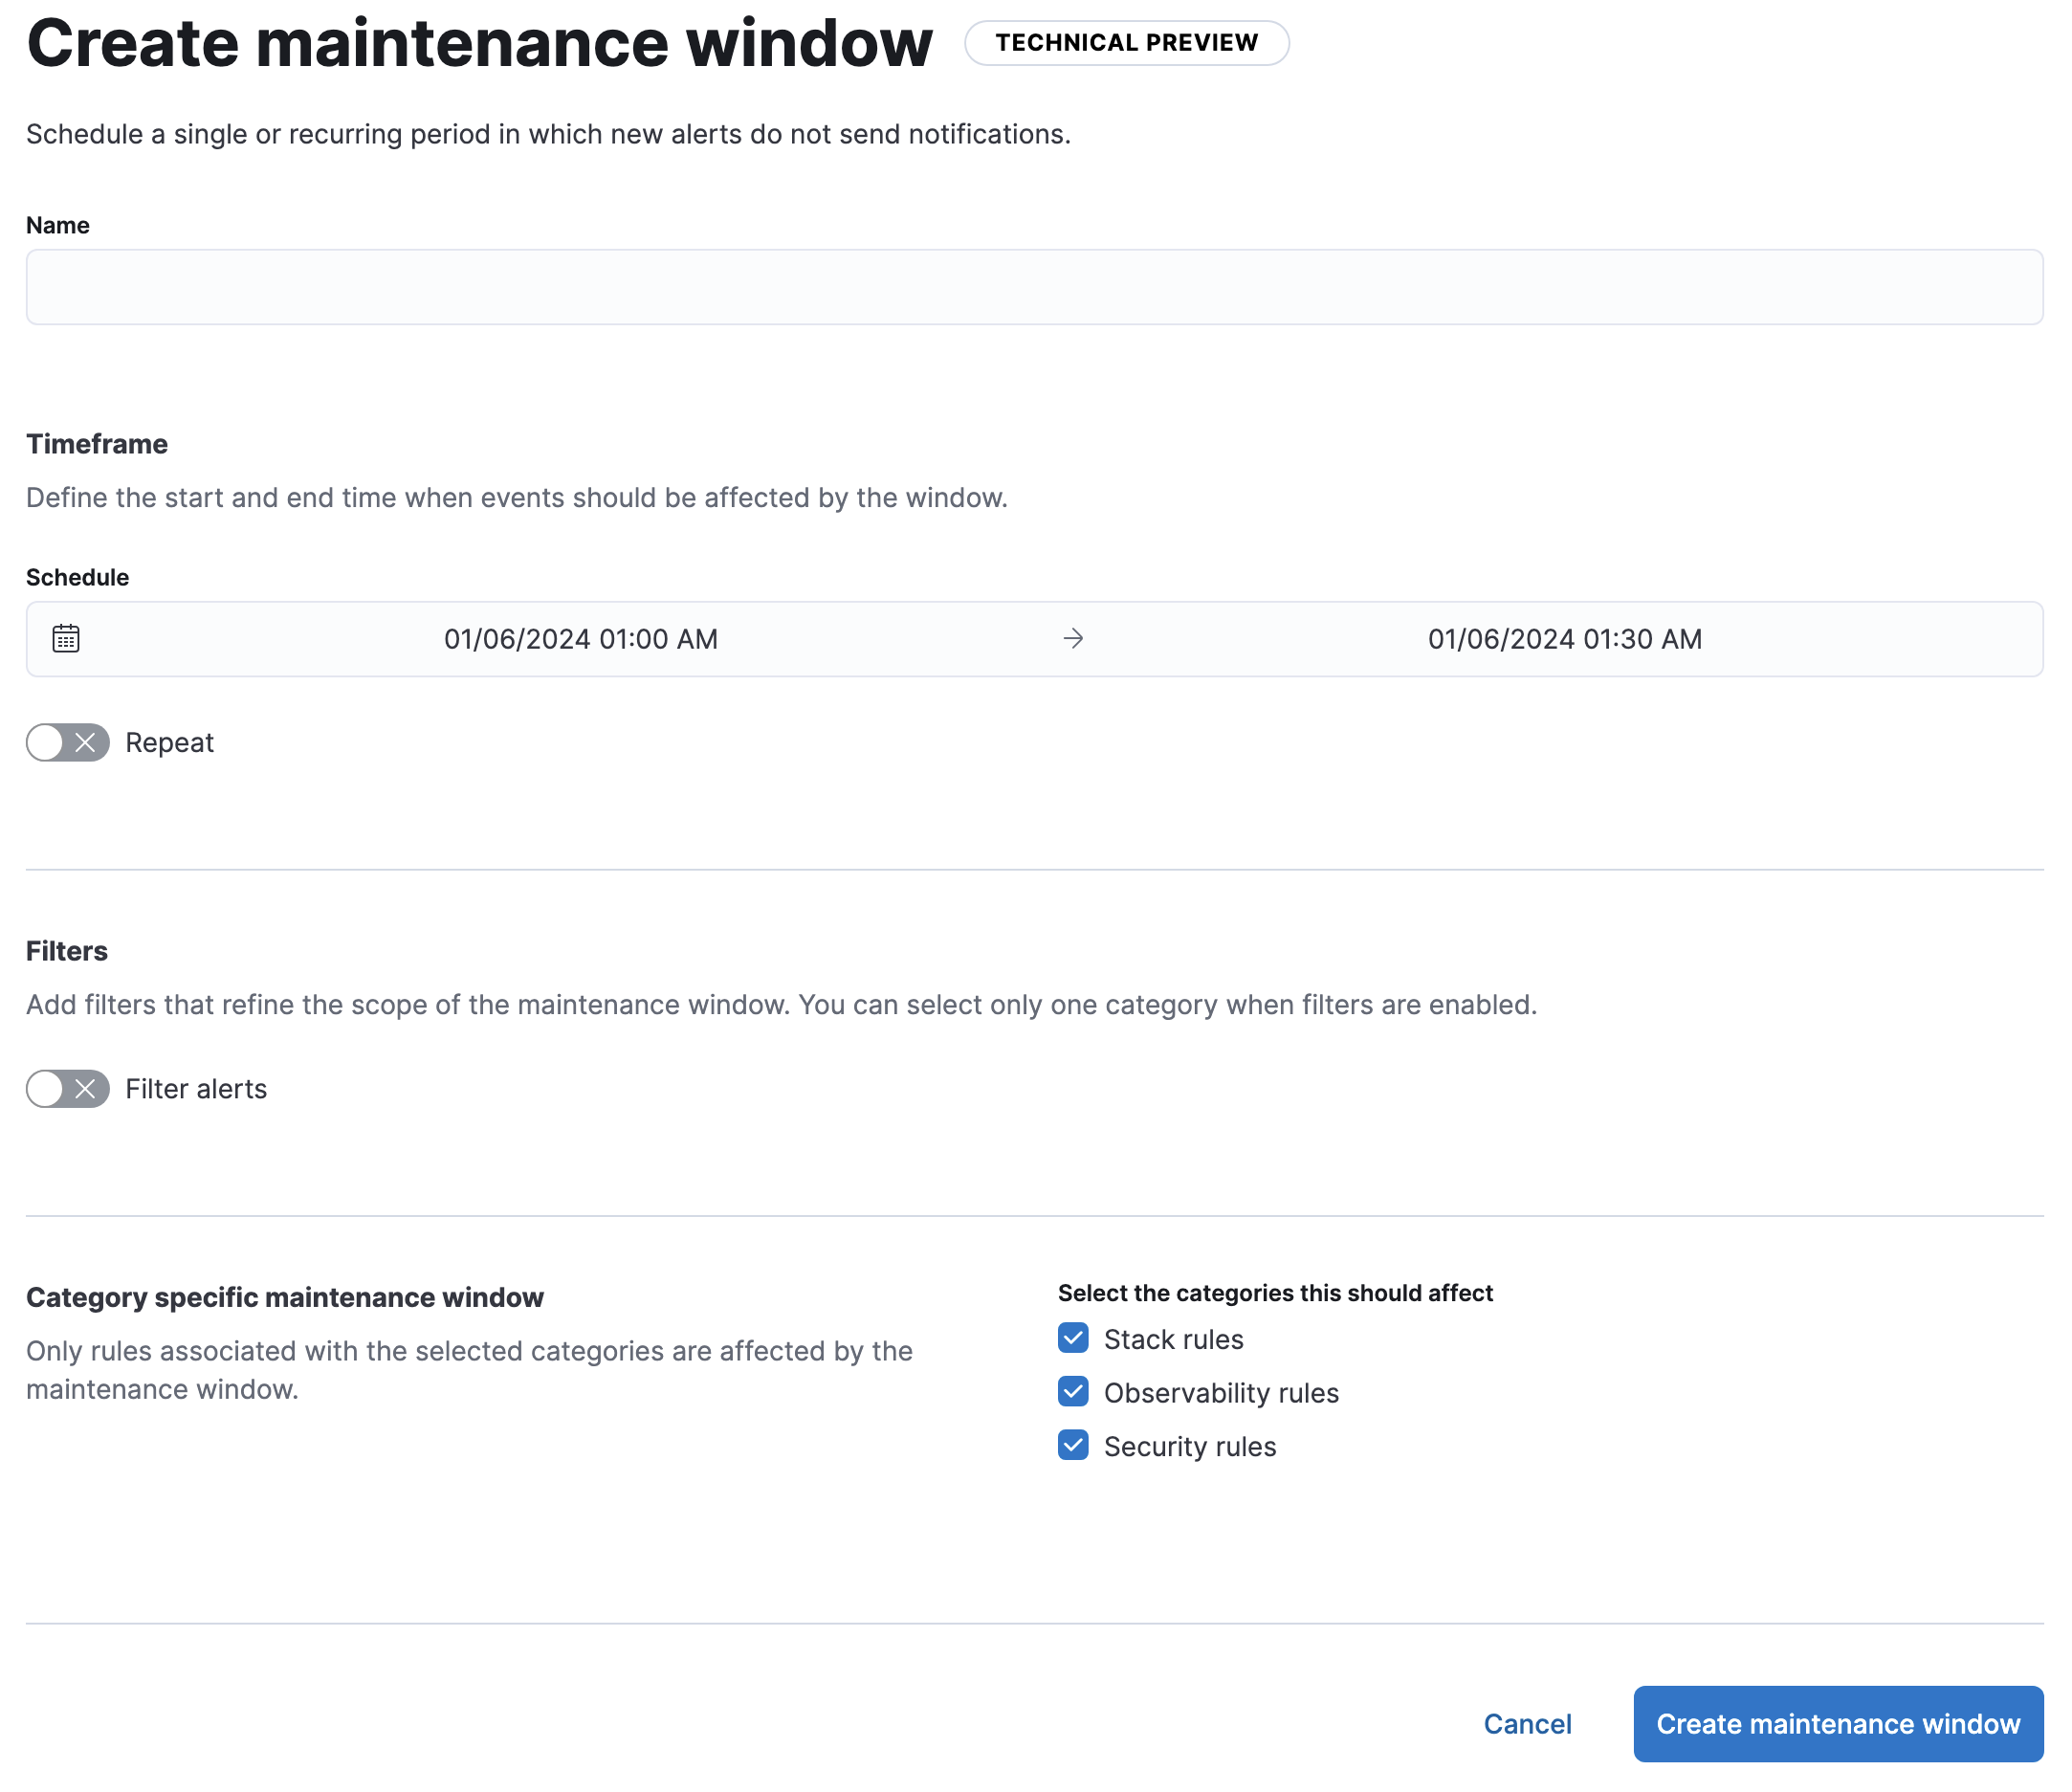 The Create Maintenance Window user interface in Kibana